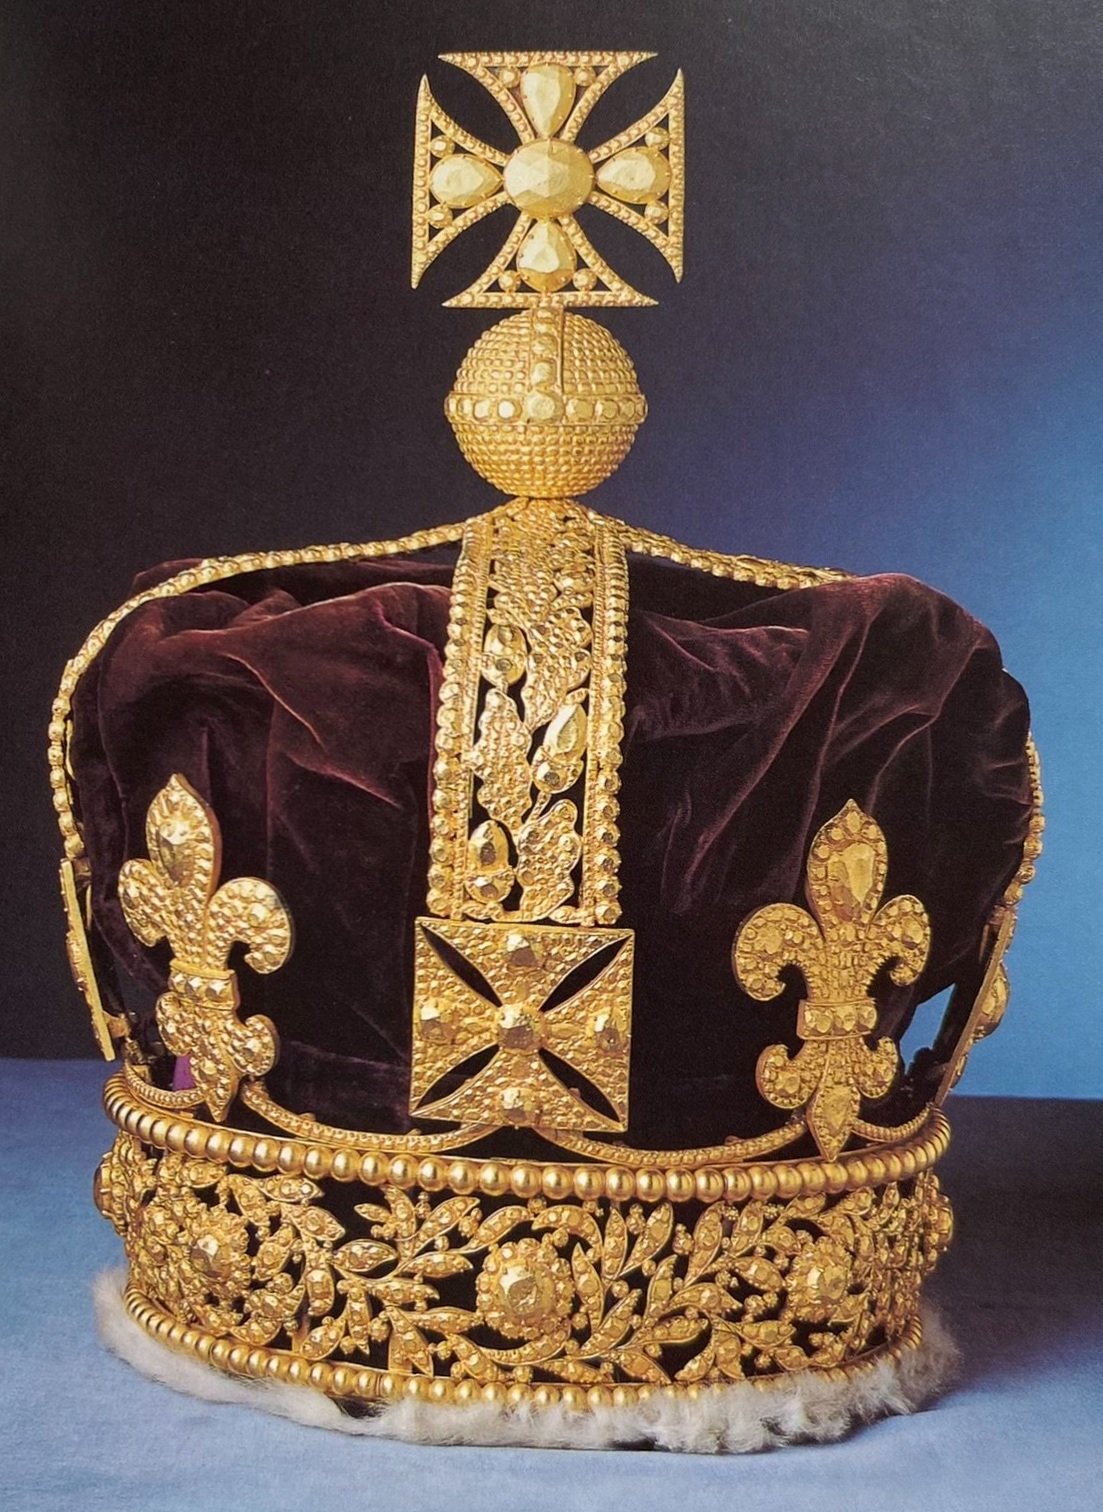 George IV’s Imperial State Crown